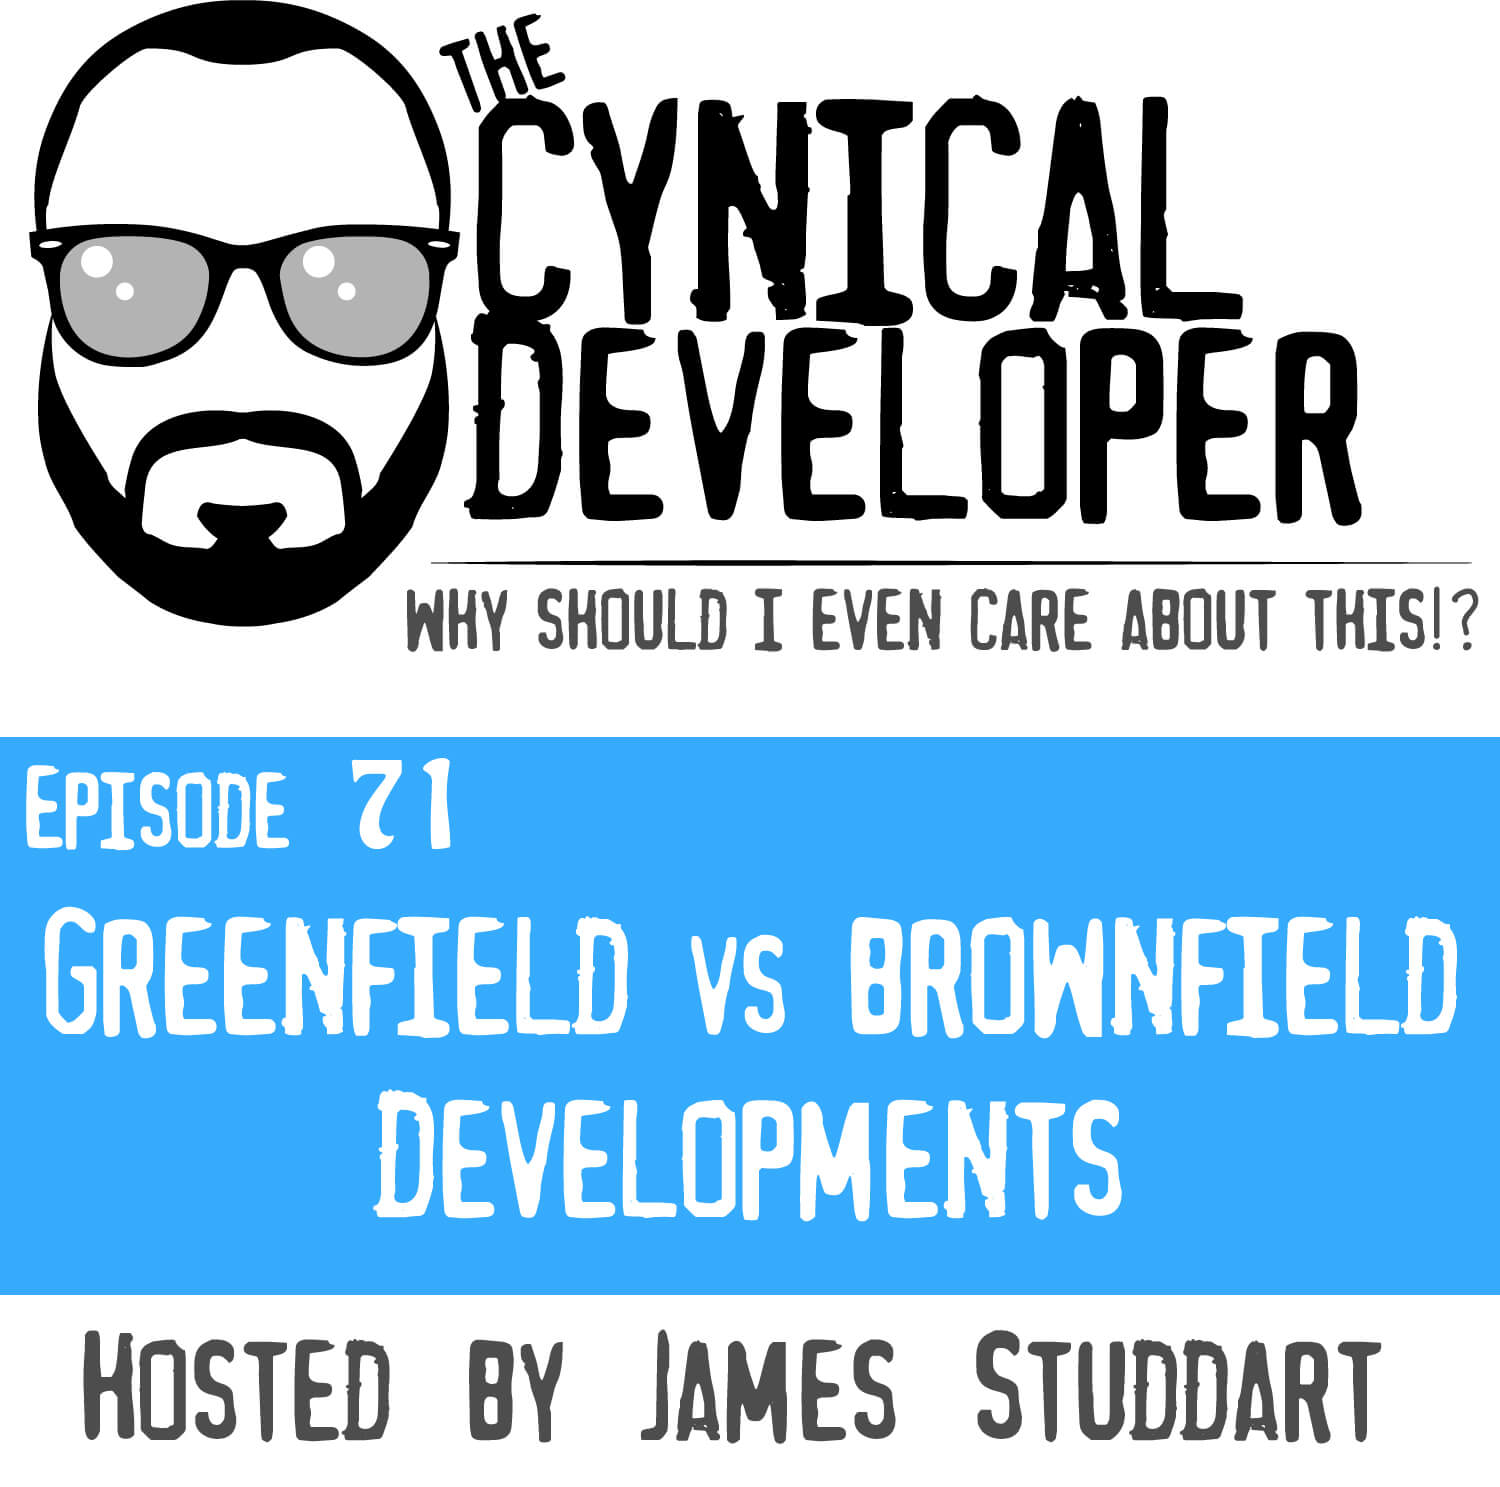 Episode 71 - Greenfield vs Brownfield Development